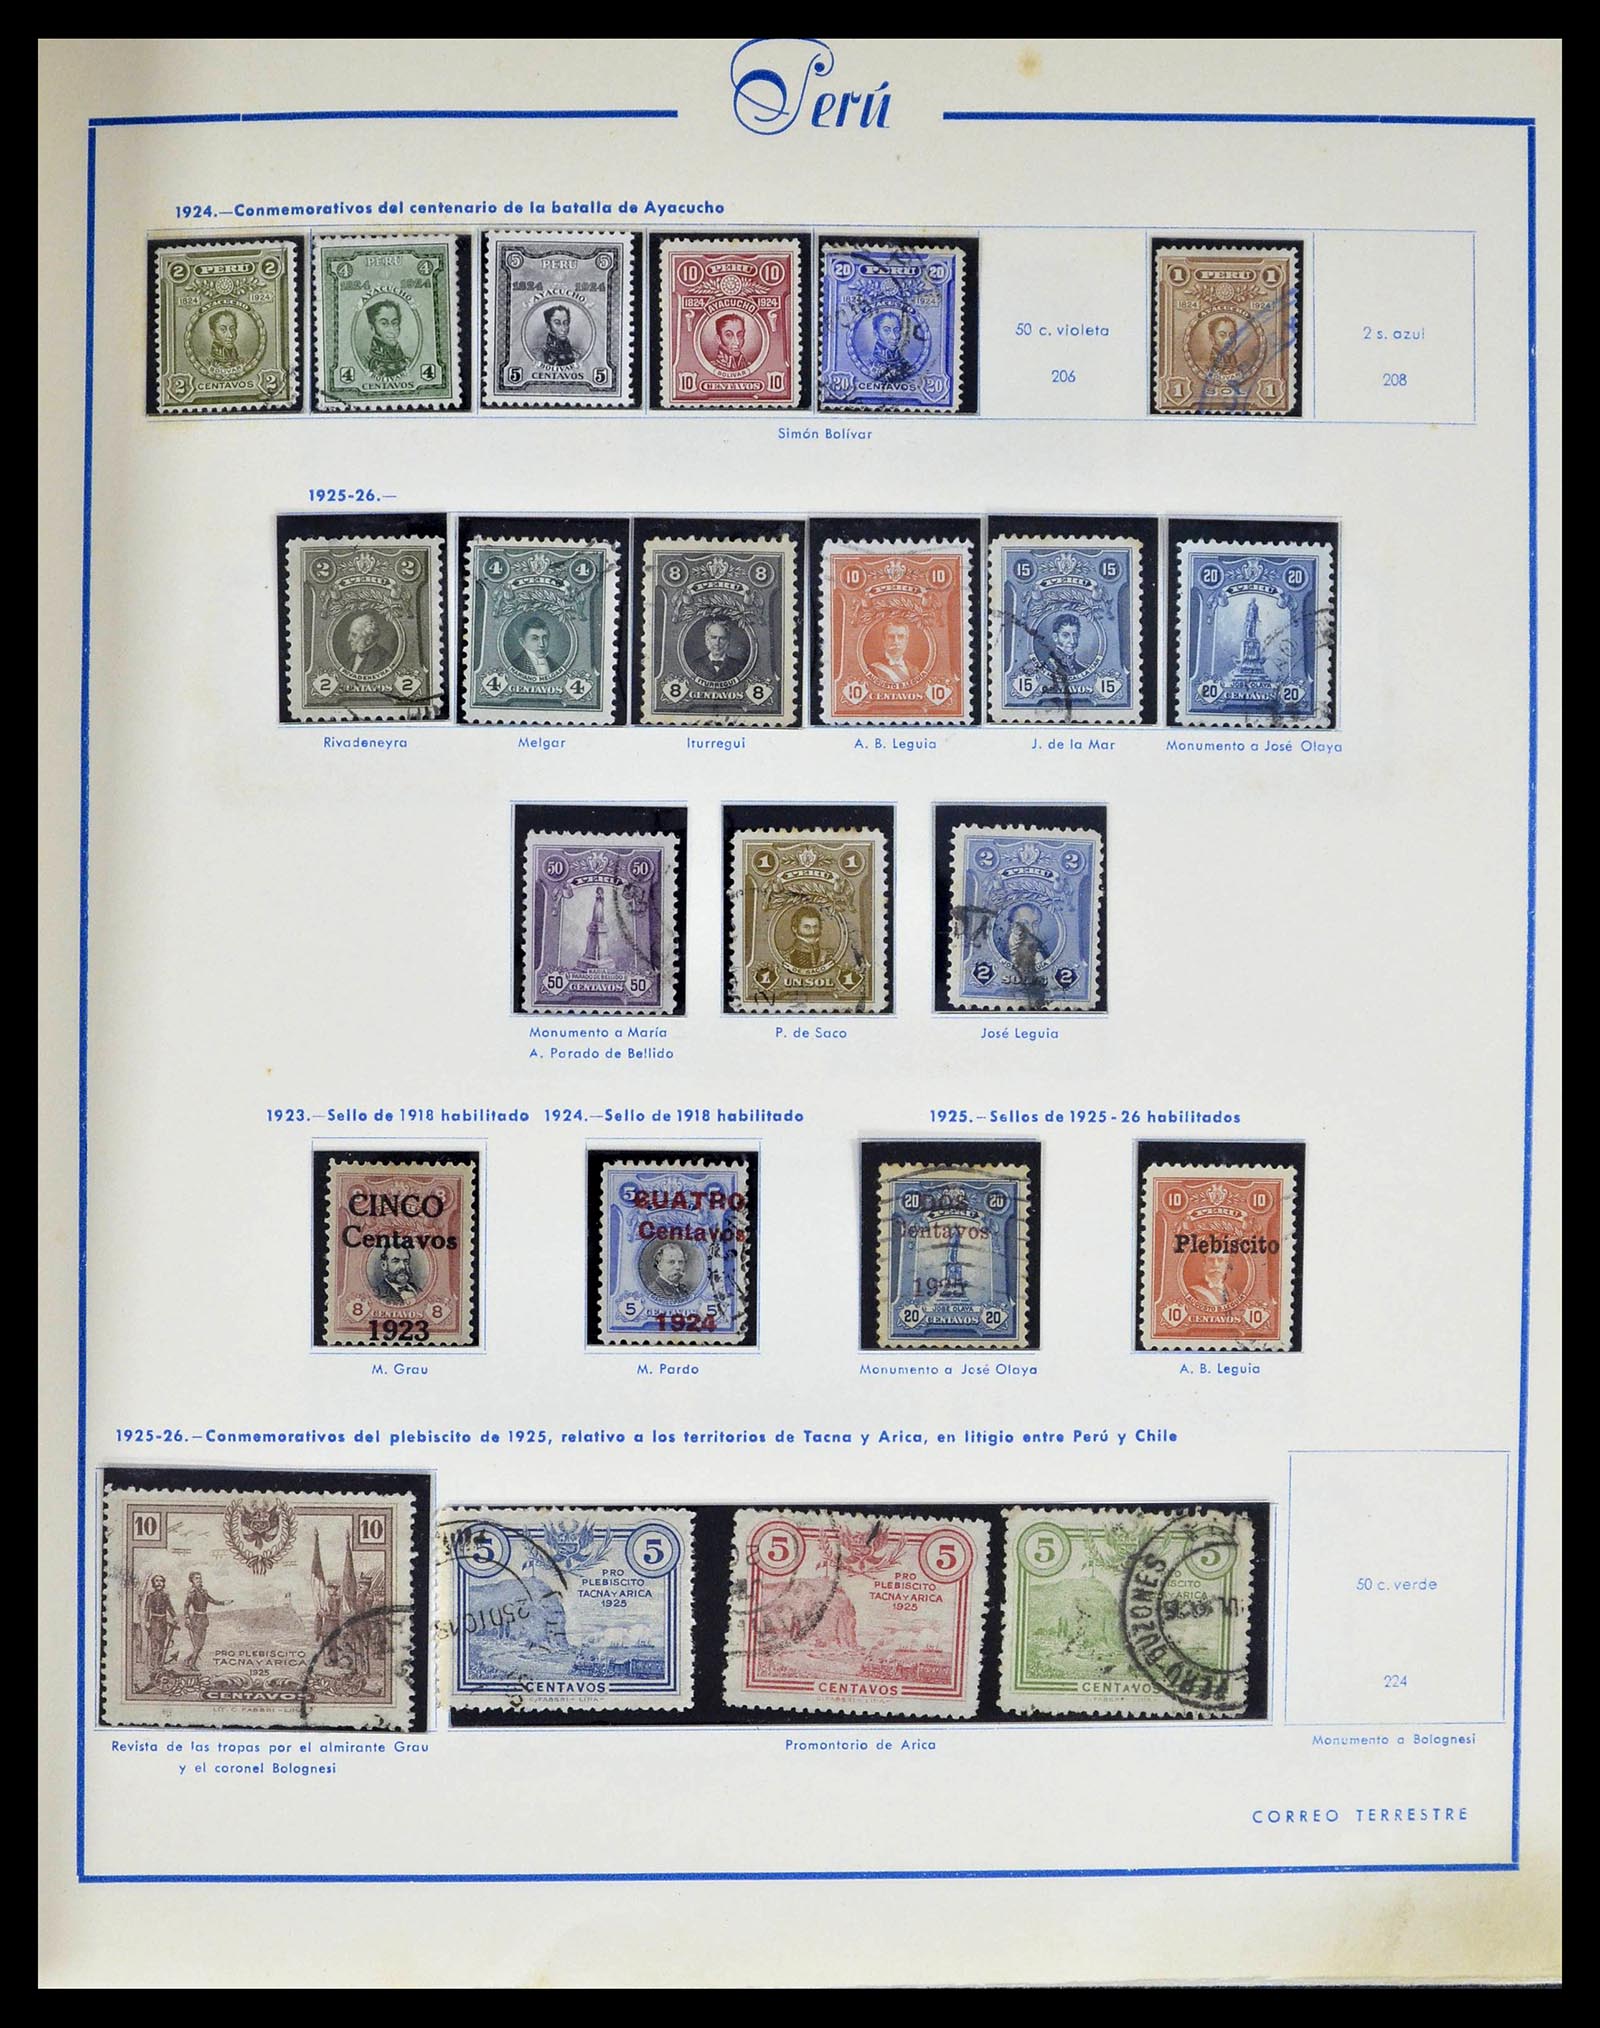 39214 0012 - Stamp collection 39214 Peru 1857-1981.